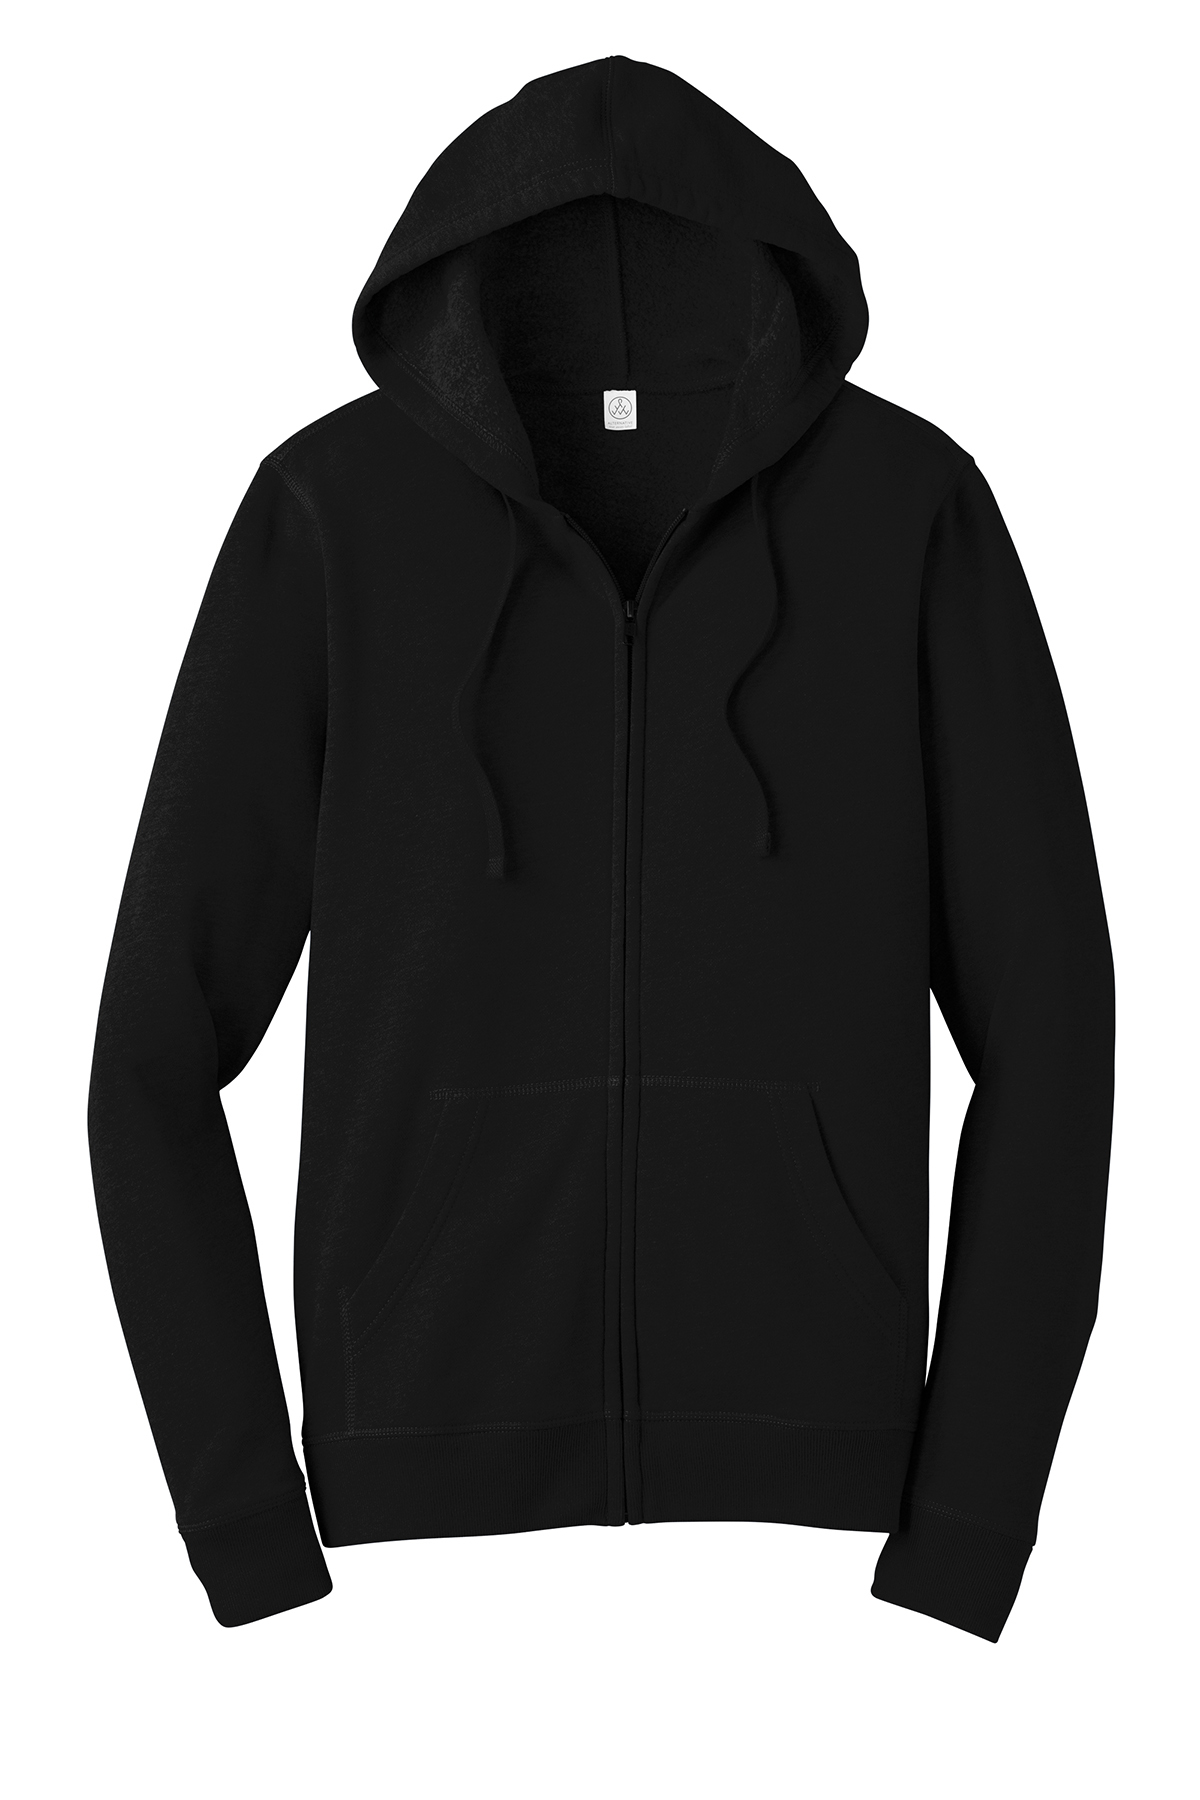 Alternative Indy Blended Fleece Zip Hoodie | Product | SanMar